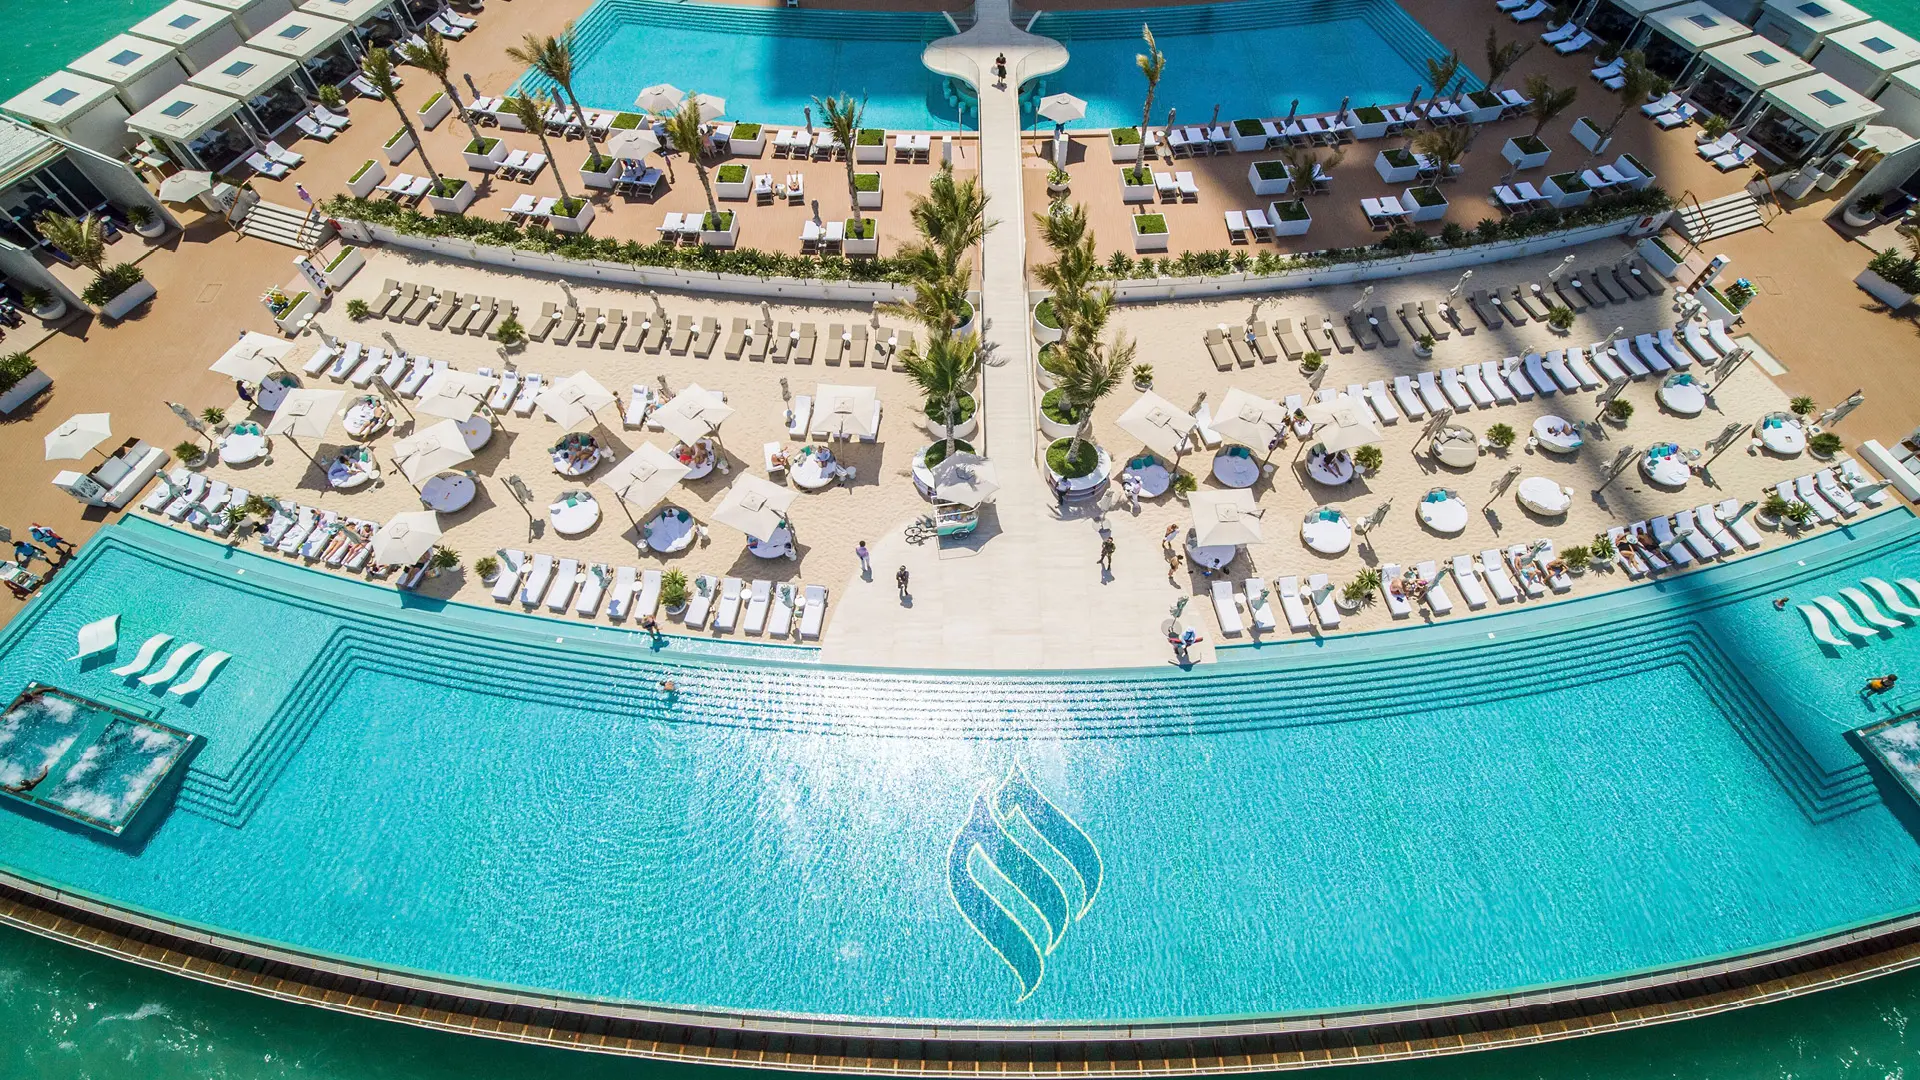 Hotel review Service & Facilities' - Burj Al Arab Jumeirah - 0